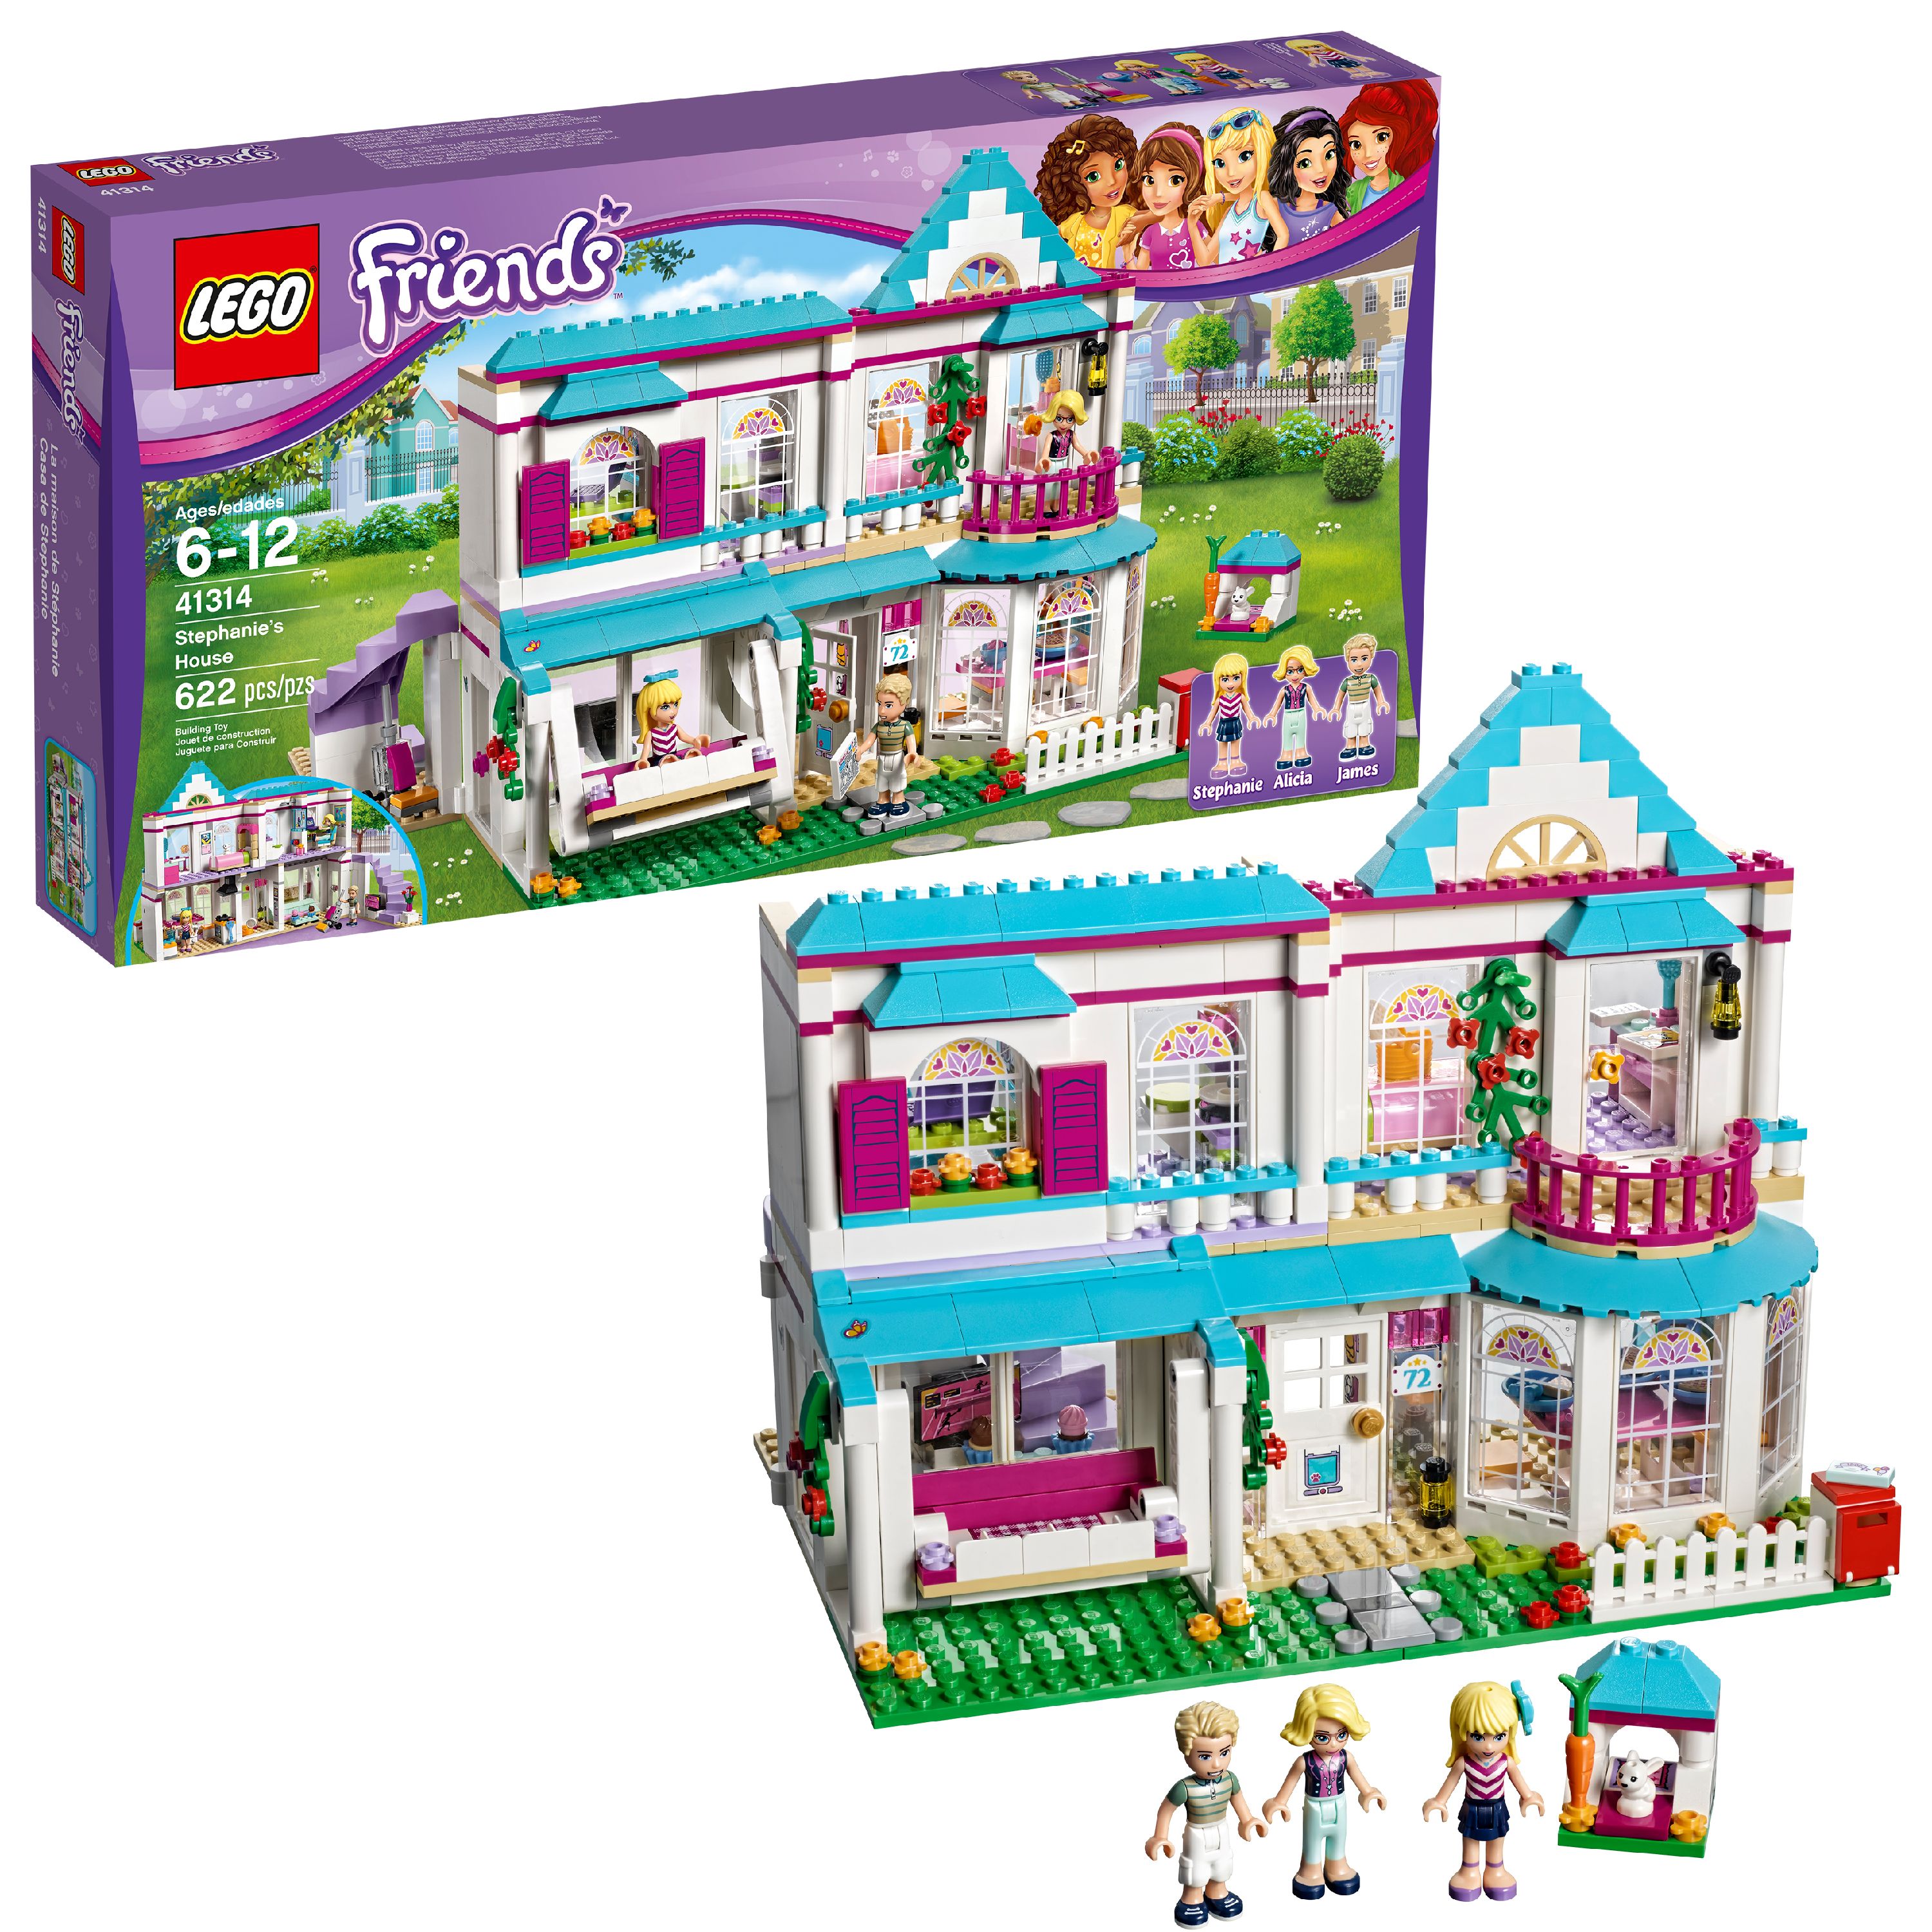 LEGO Friends Stephanie's House 41314 Toy Dollhouse Playset (622 pcs) - image 1 of 6